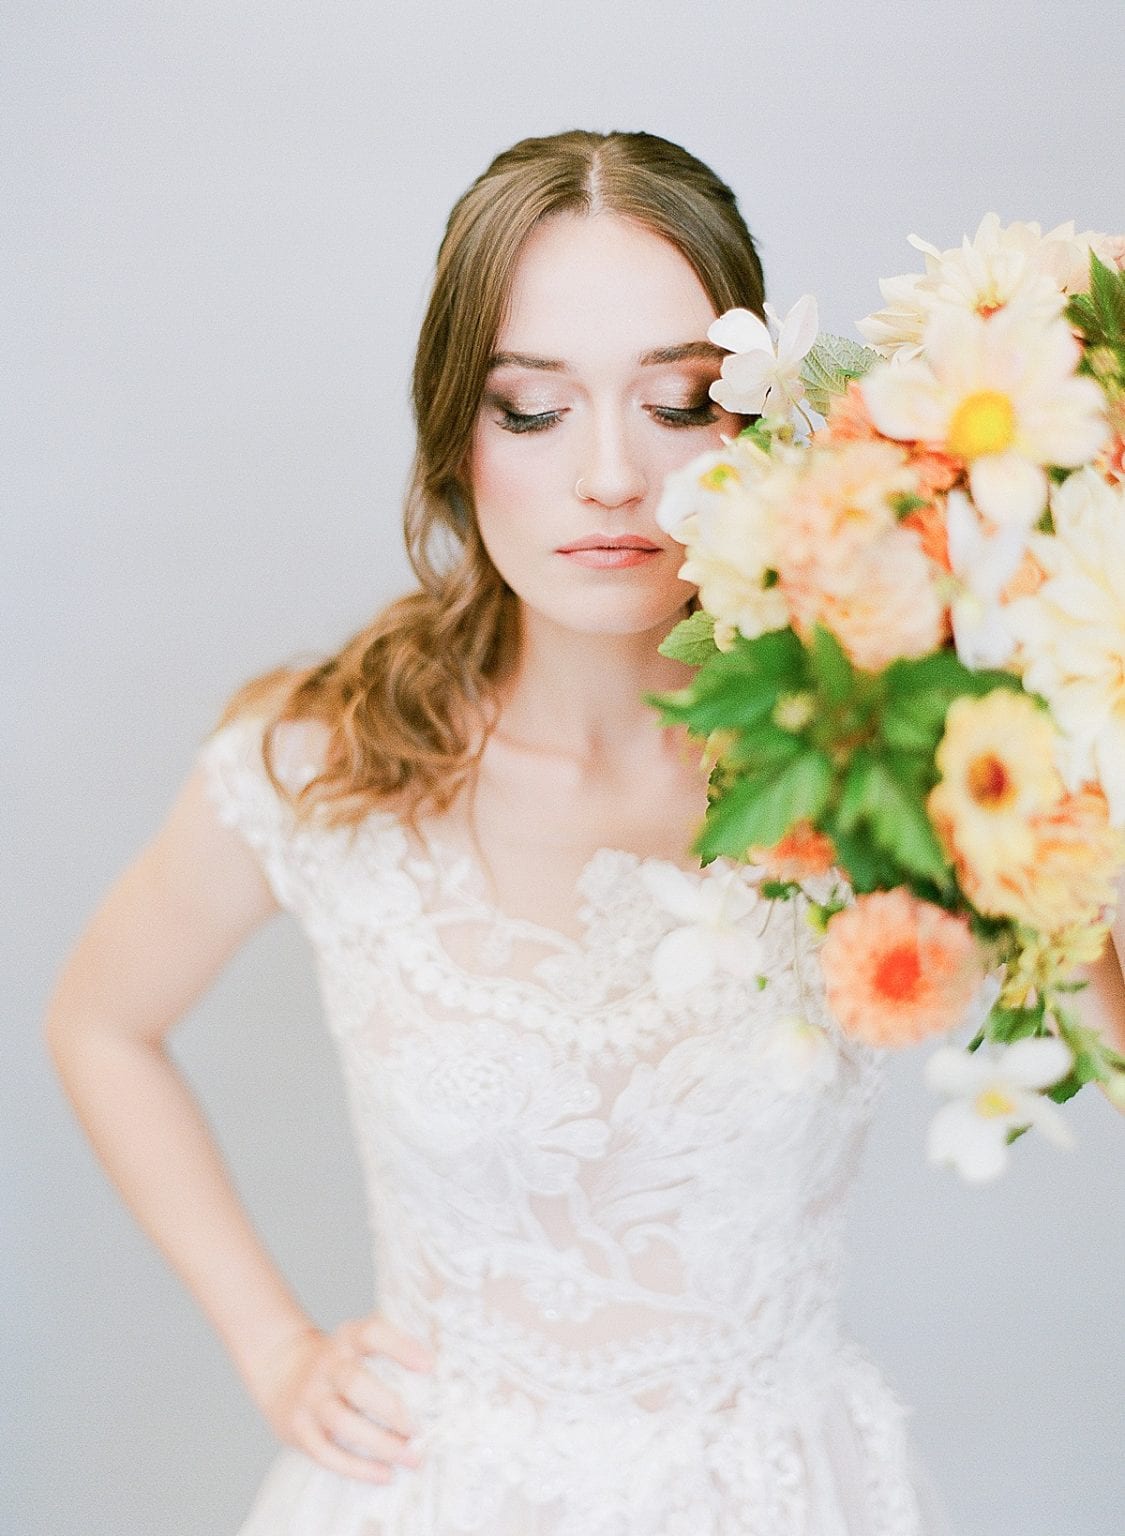 Wedding Hair and Makeup - McSween Photography